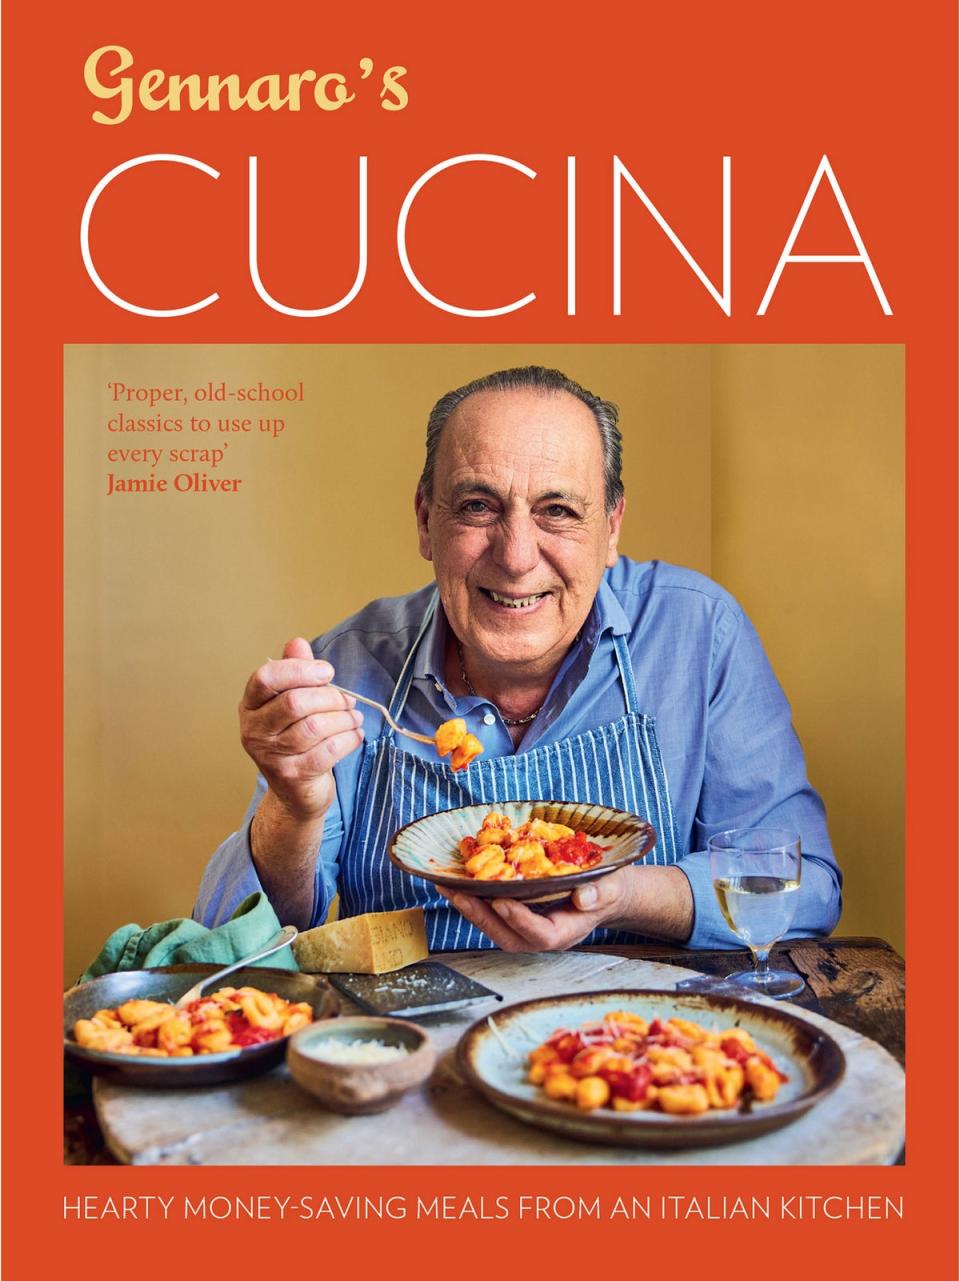 ‘Gennaro’s Cucina’ focuses on hearty, money-saving meals (Pavillion Books/PA)